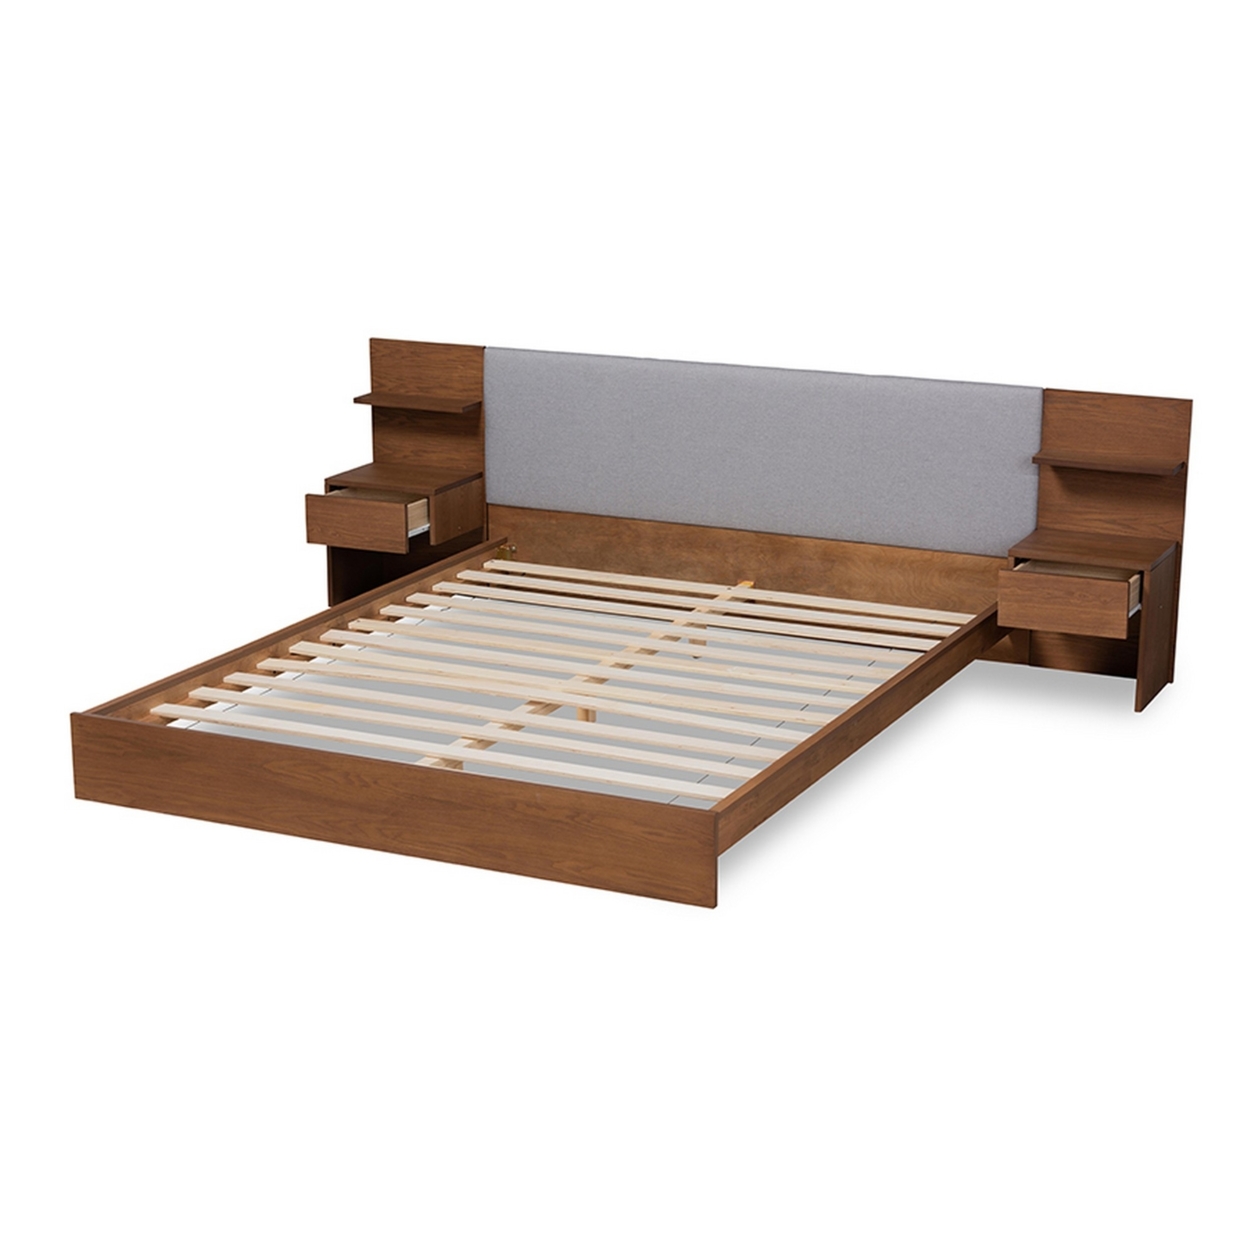 Sami Wood Queen Size Platform Storage Bed with Built-In Nightstands - image 5 of 5